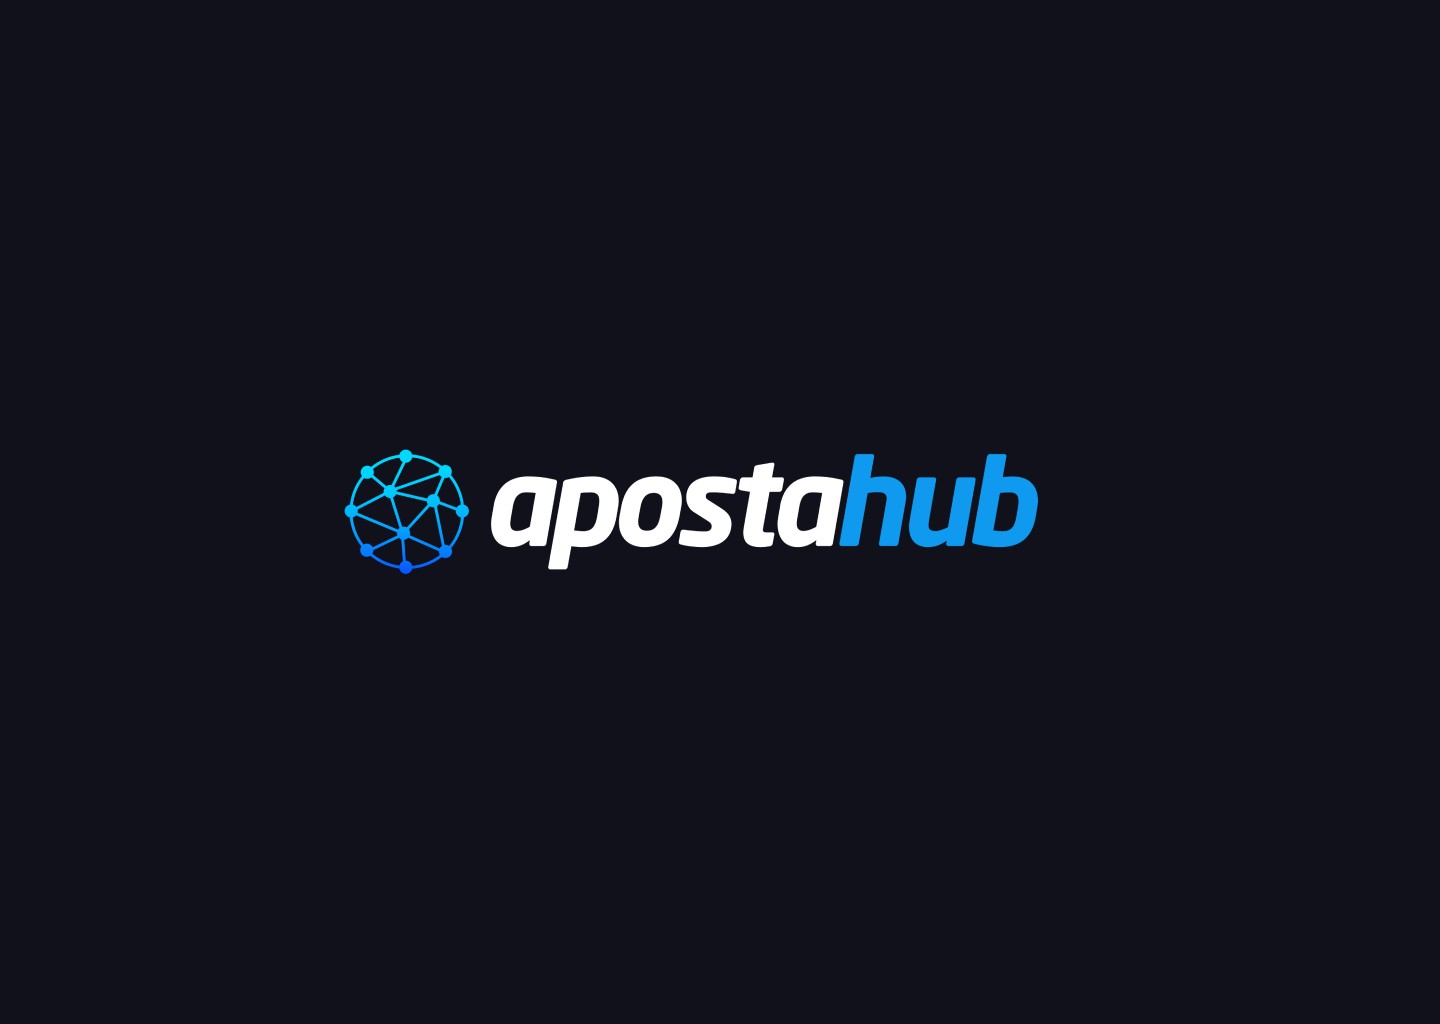 Aposta Hub